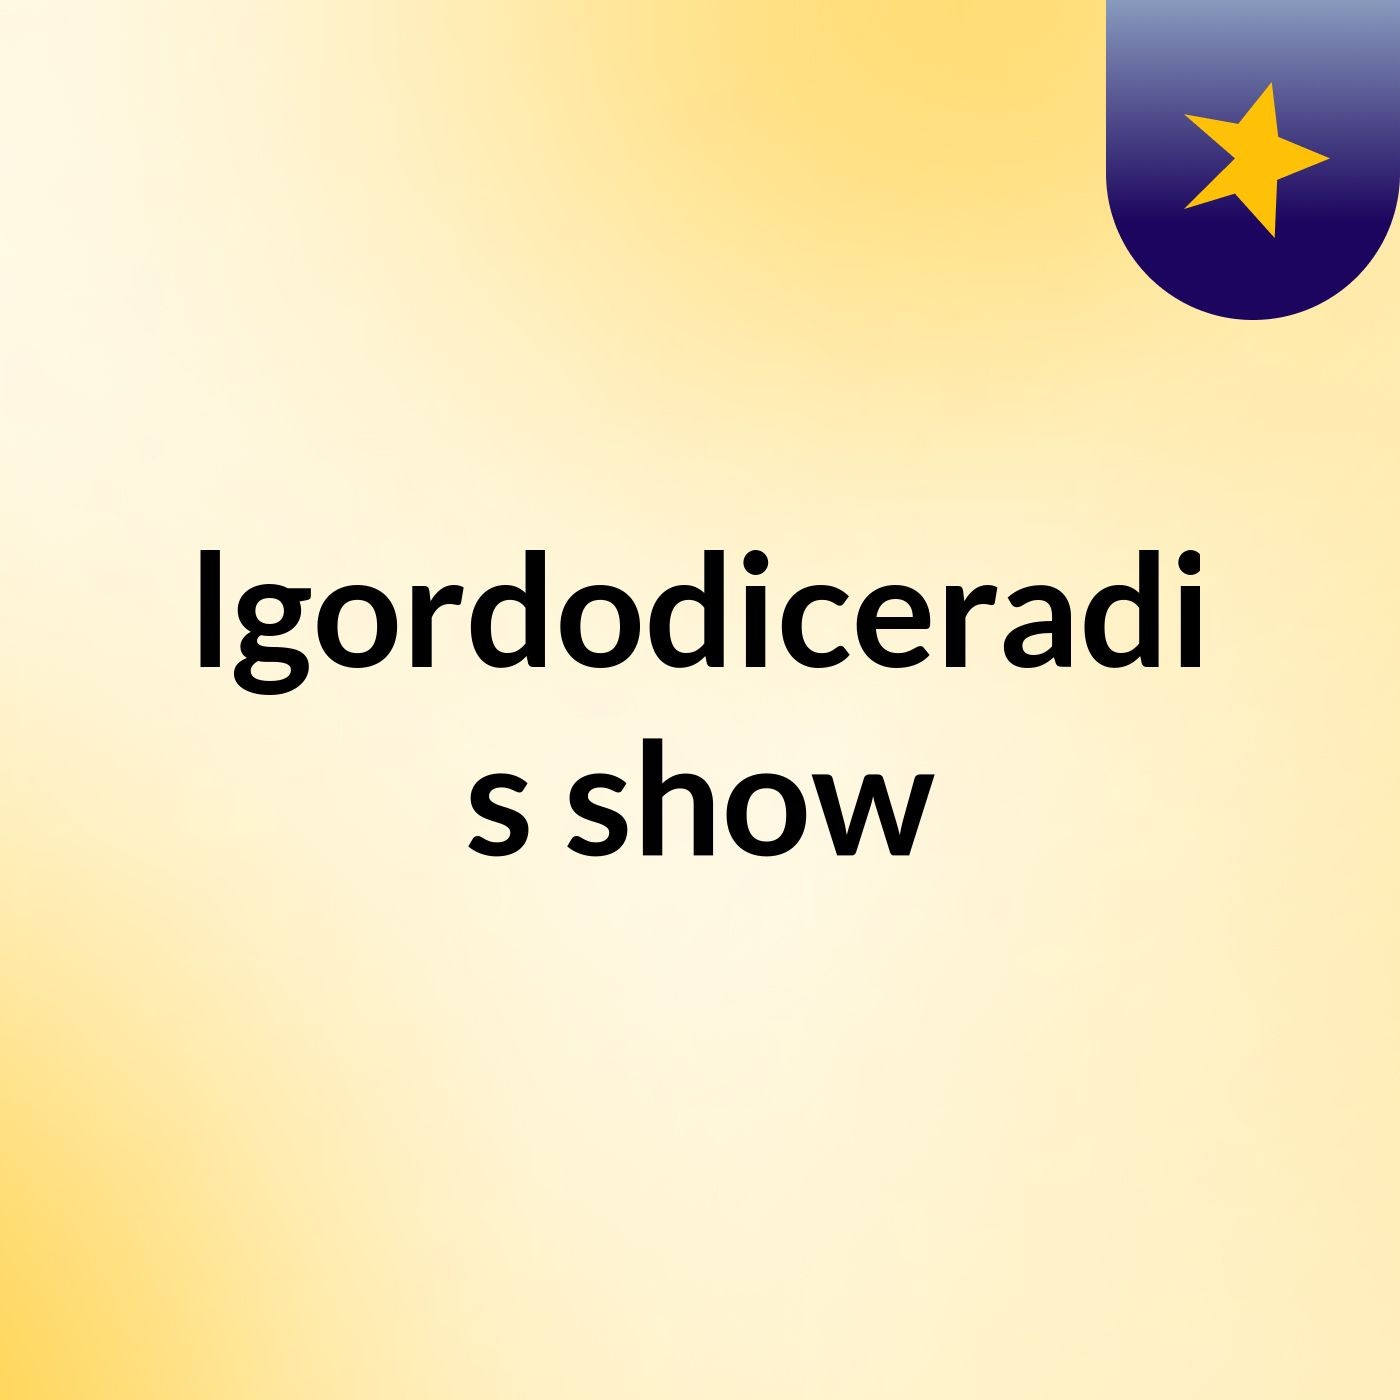 Elgordodiceradio's show